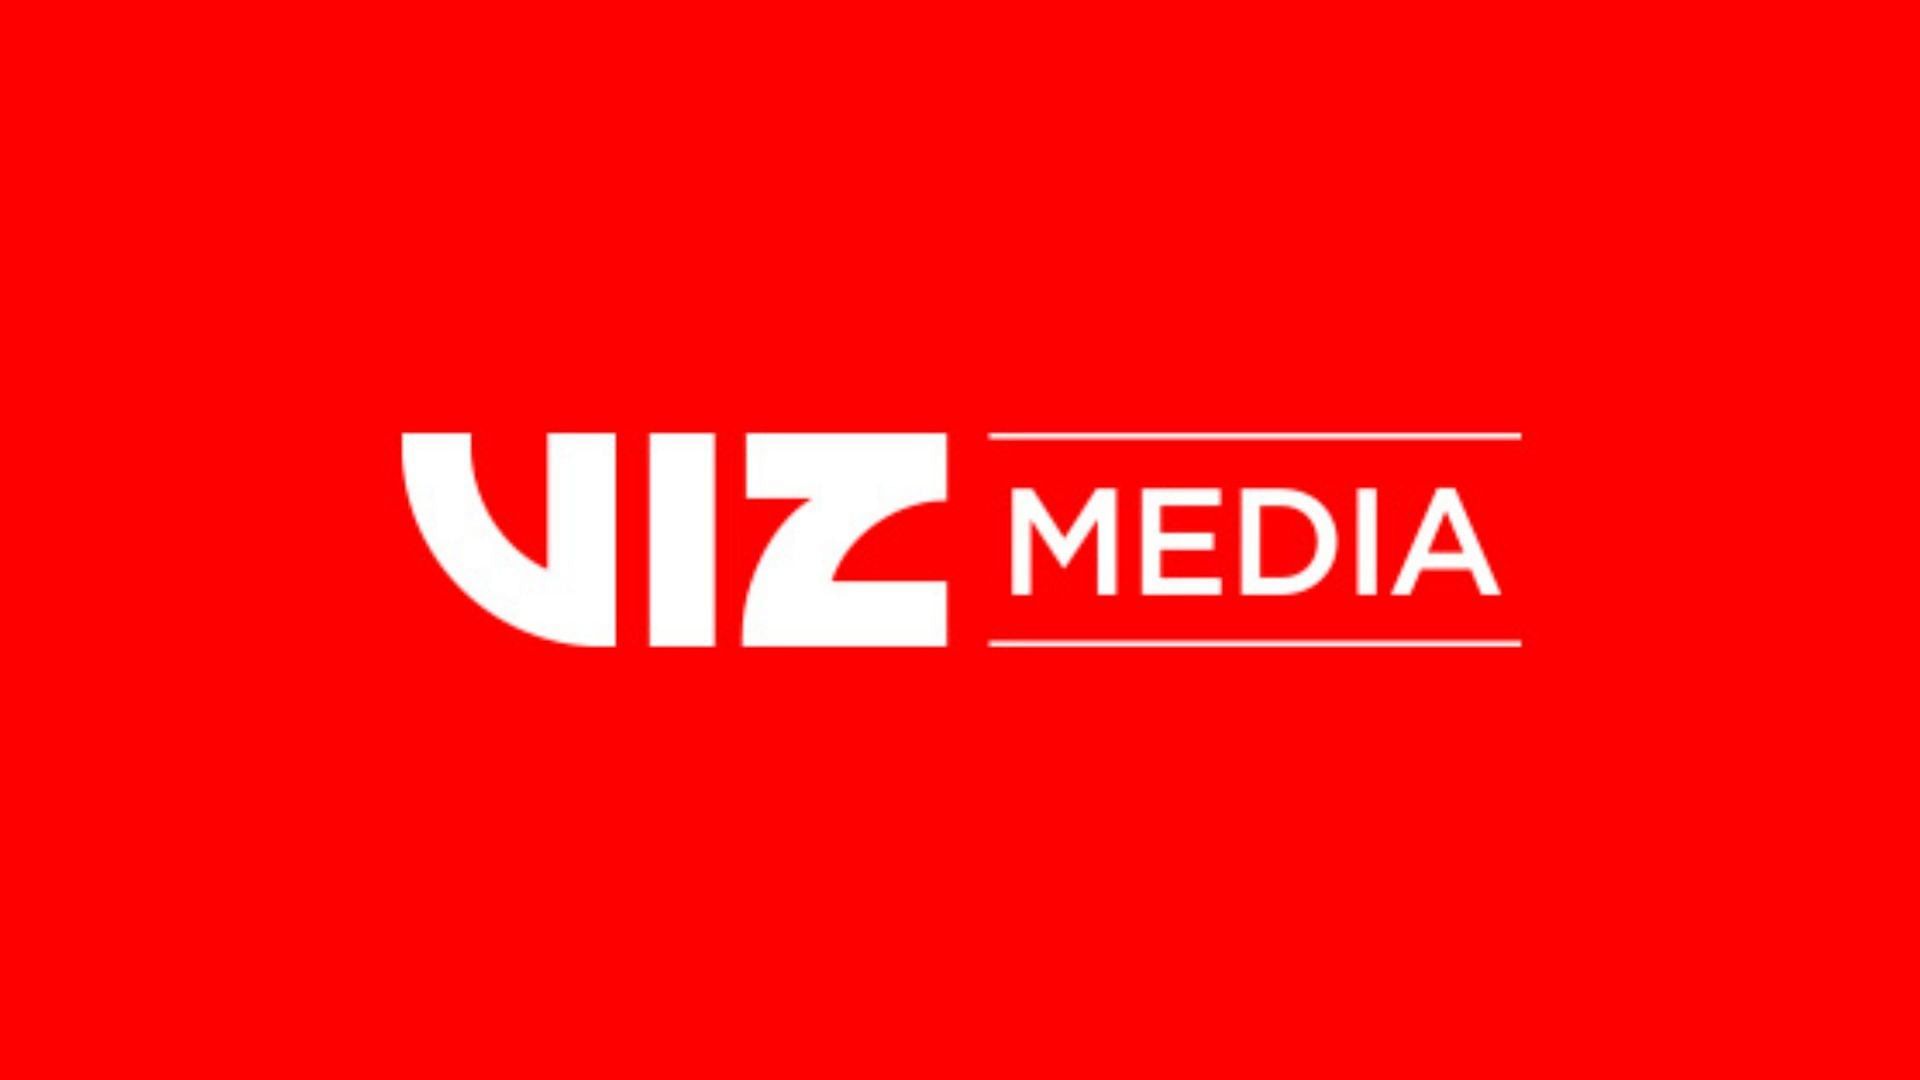 VIZ Media announces new digital manga subscription service (Image via Viz Media)